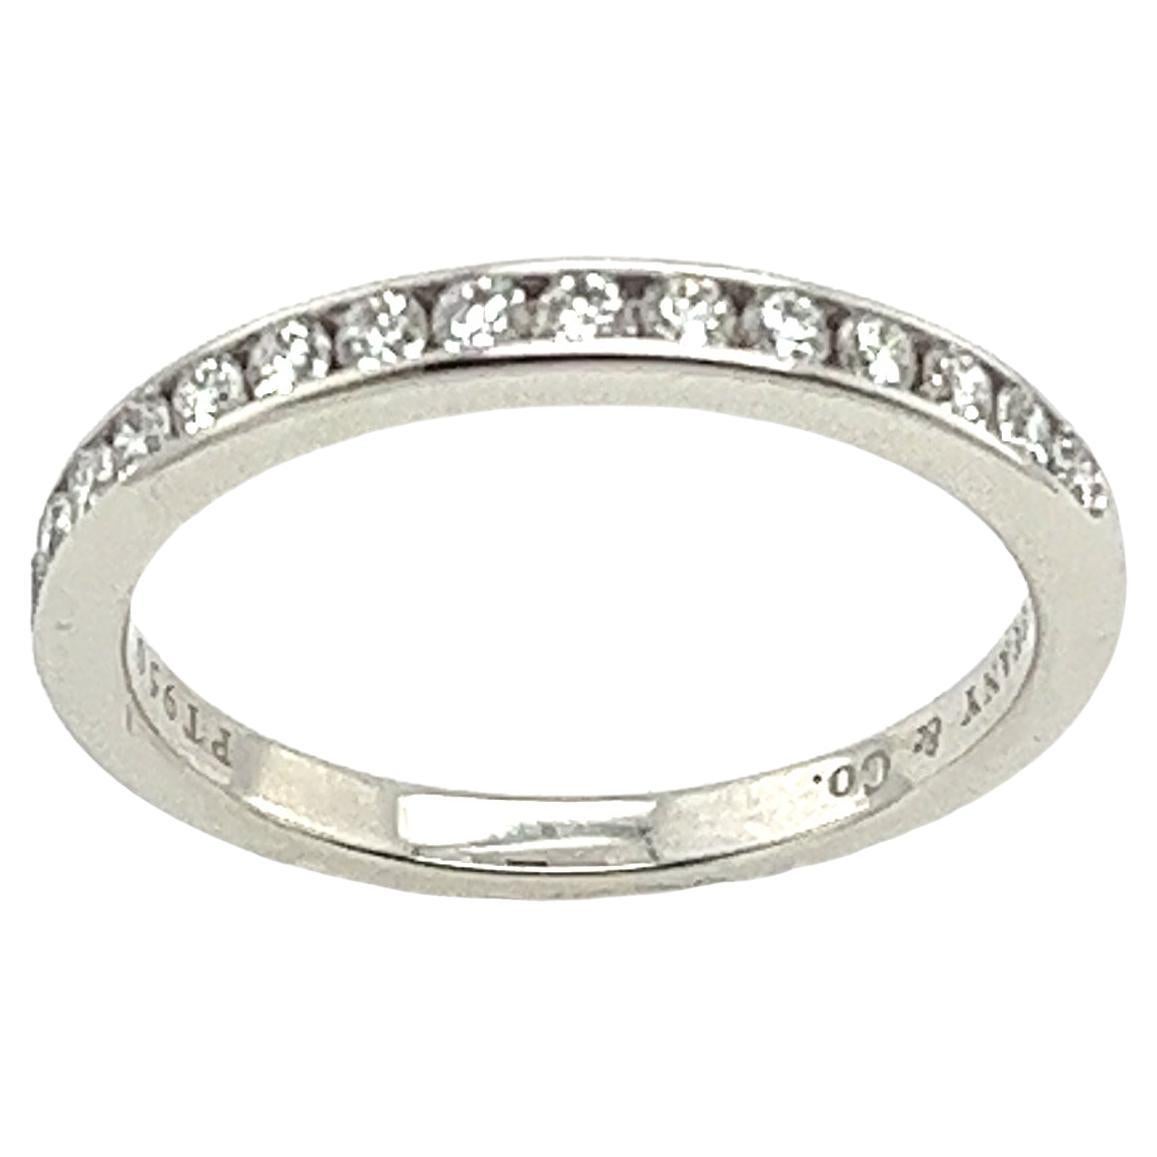 Tiffany & Co. Platinum Diamond Half Eternity Ring set with 15 round Diamonds